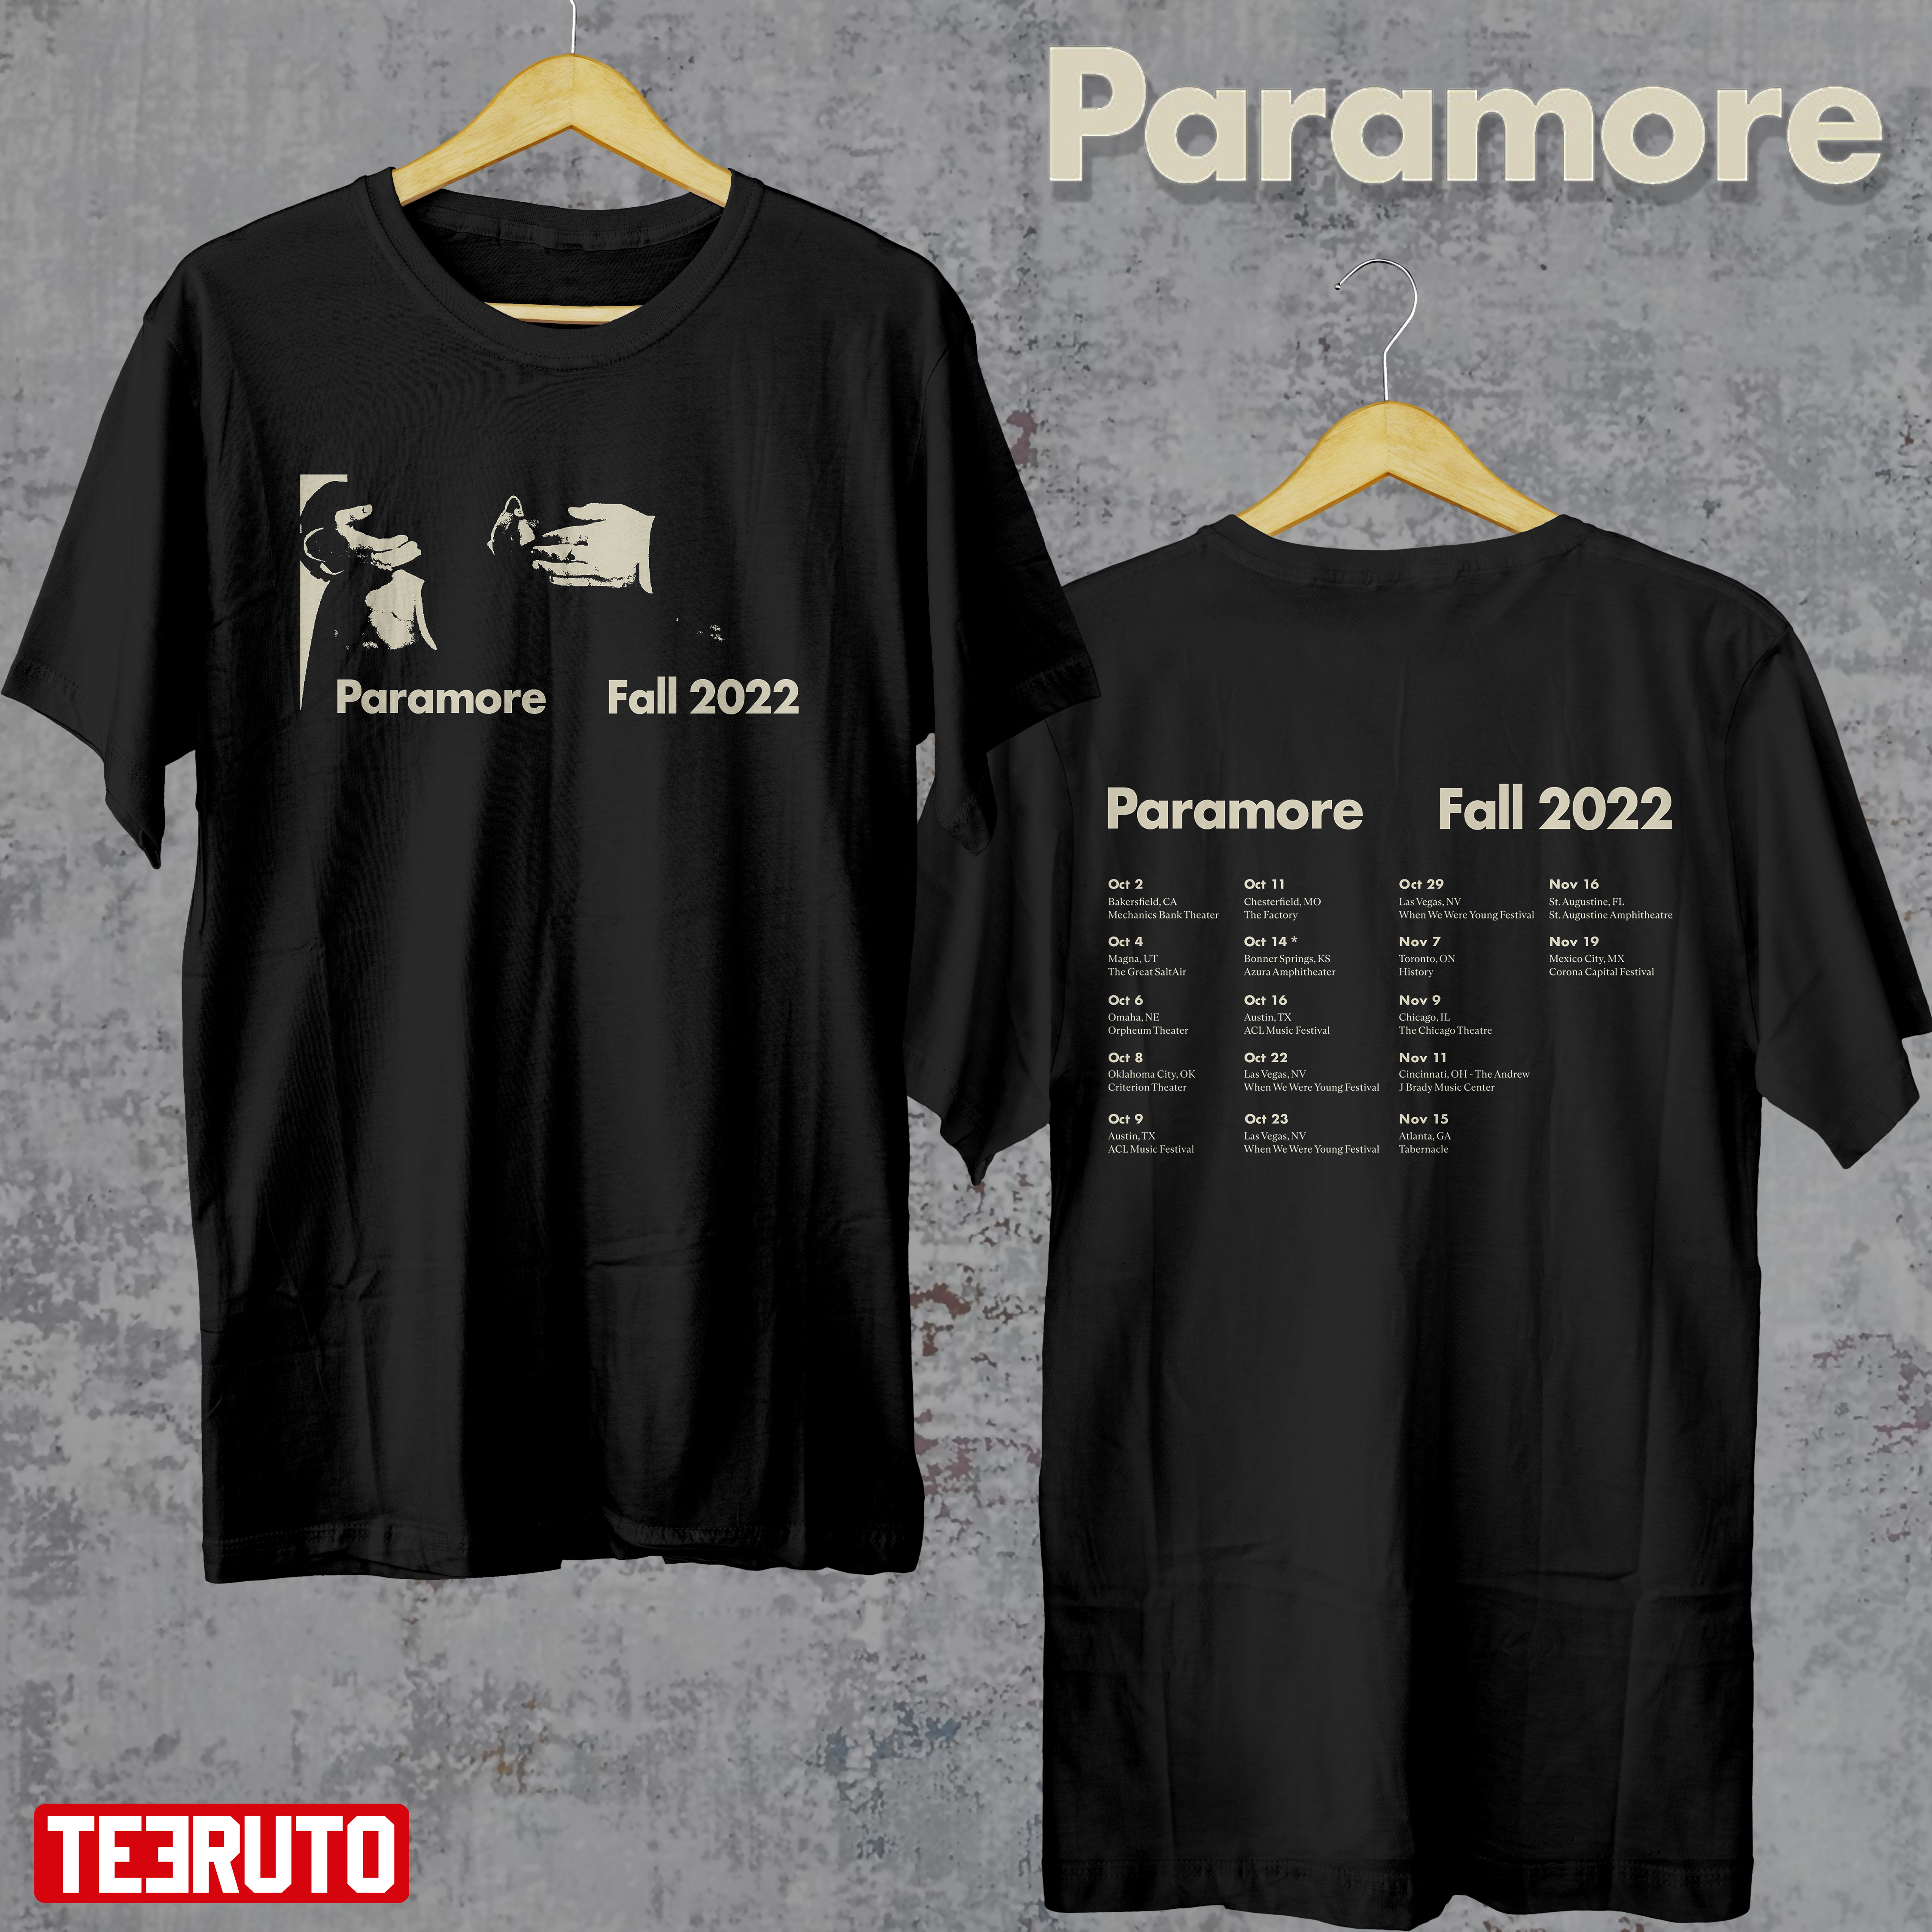 Paramore Fall Tour 2022 Unisex T-Shirt - Teeruto